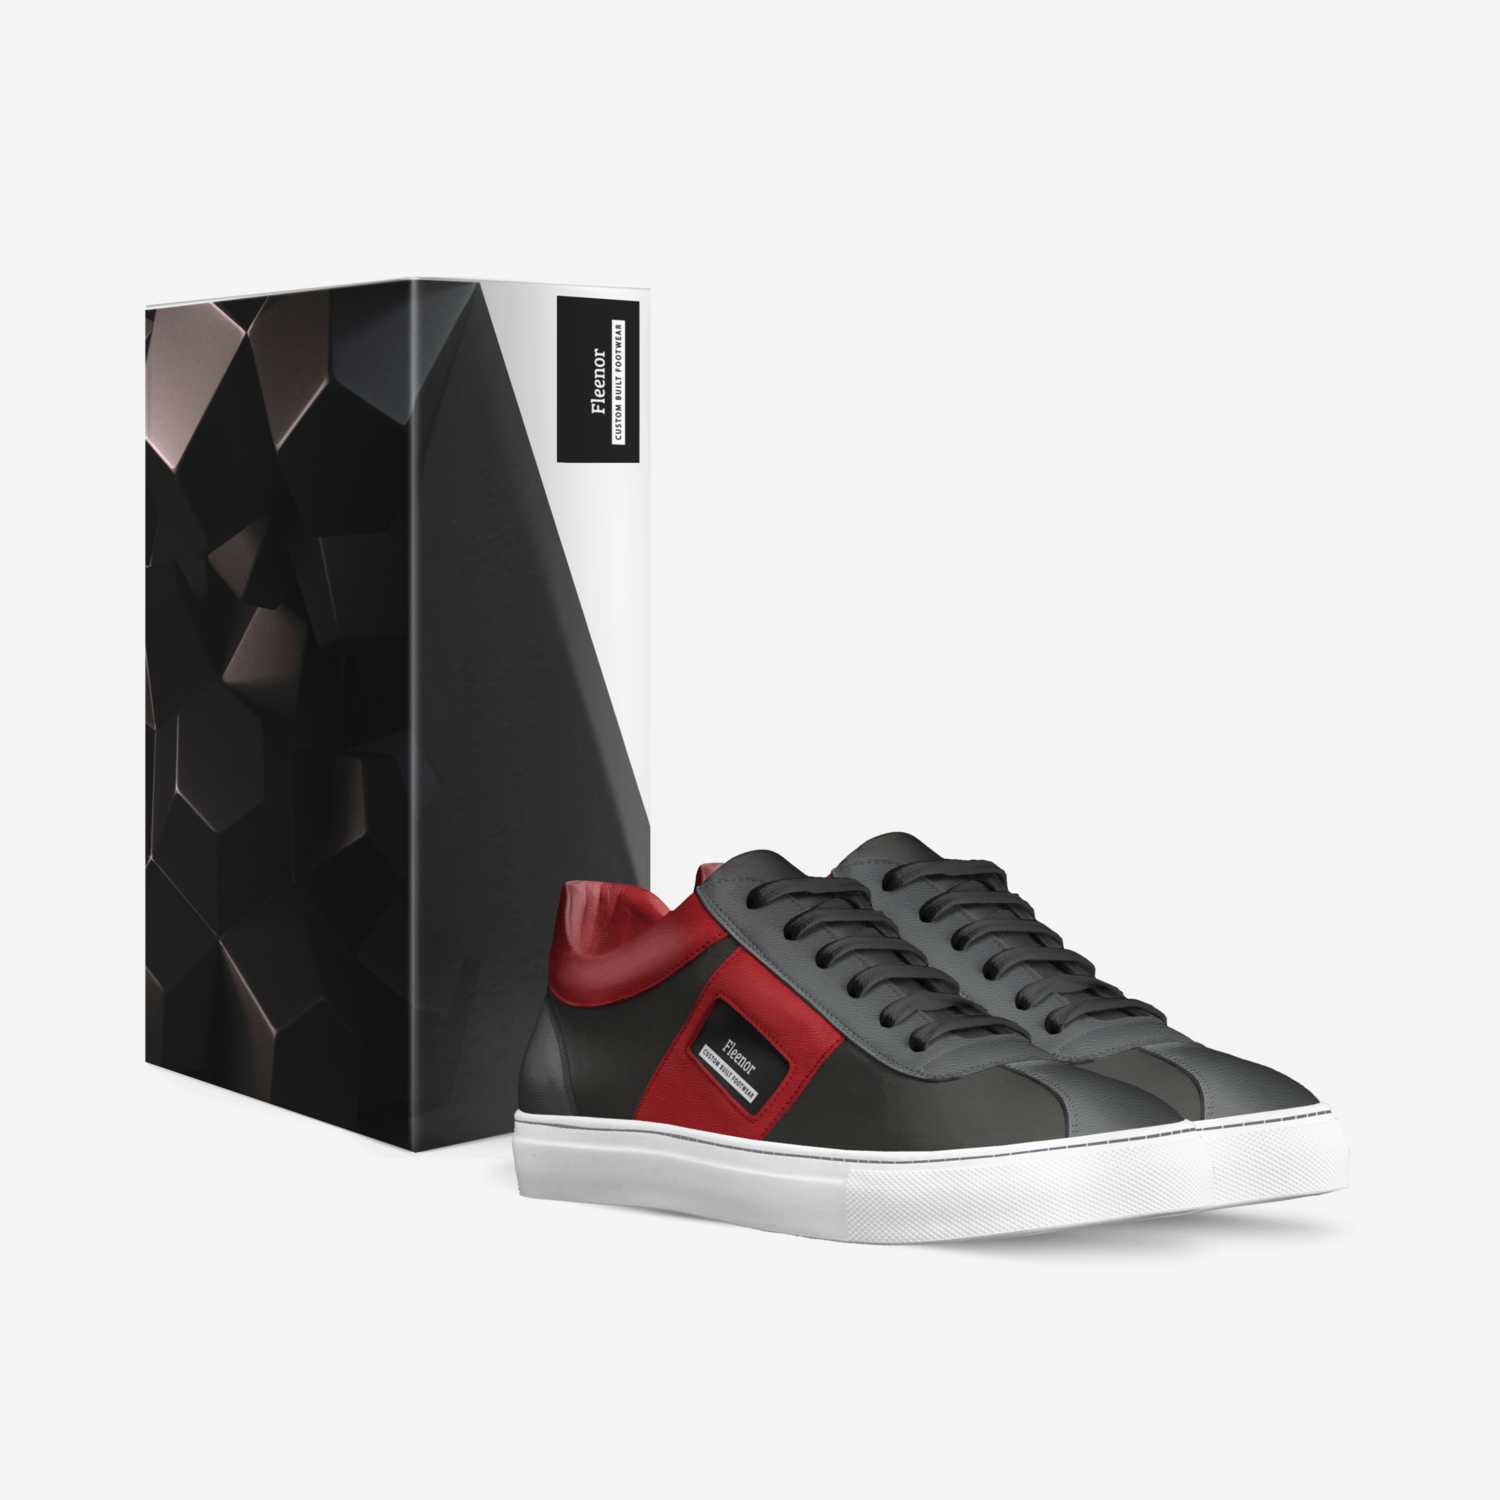 Fleenor custom made in Italy shoes by Iliyasu Tomasiewicz | Box view